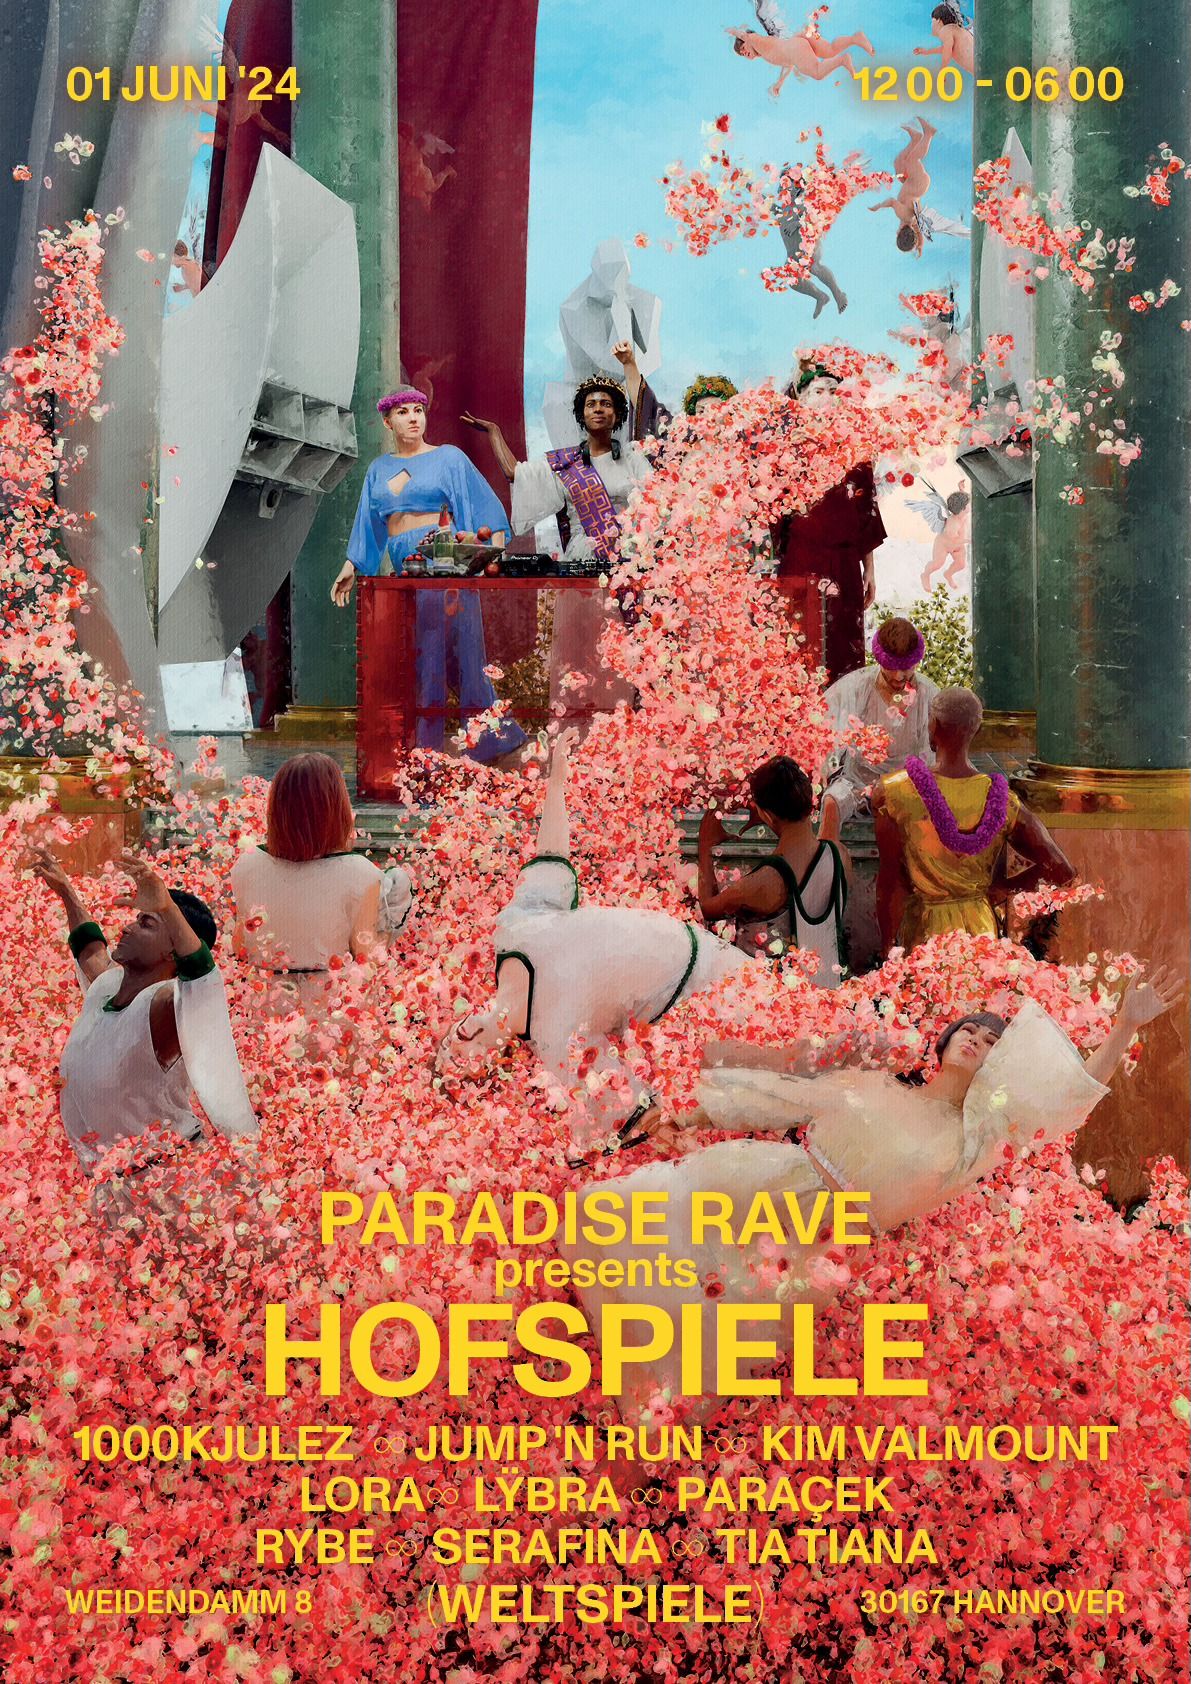 PARADISE RAVE presents Hofspiele